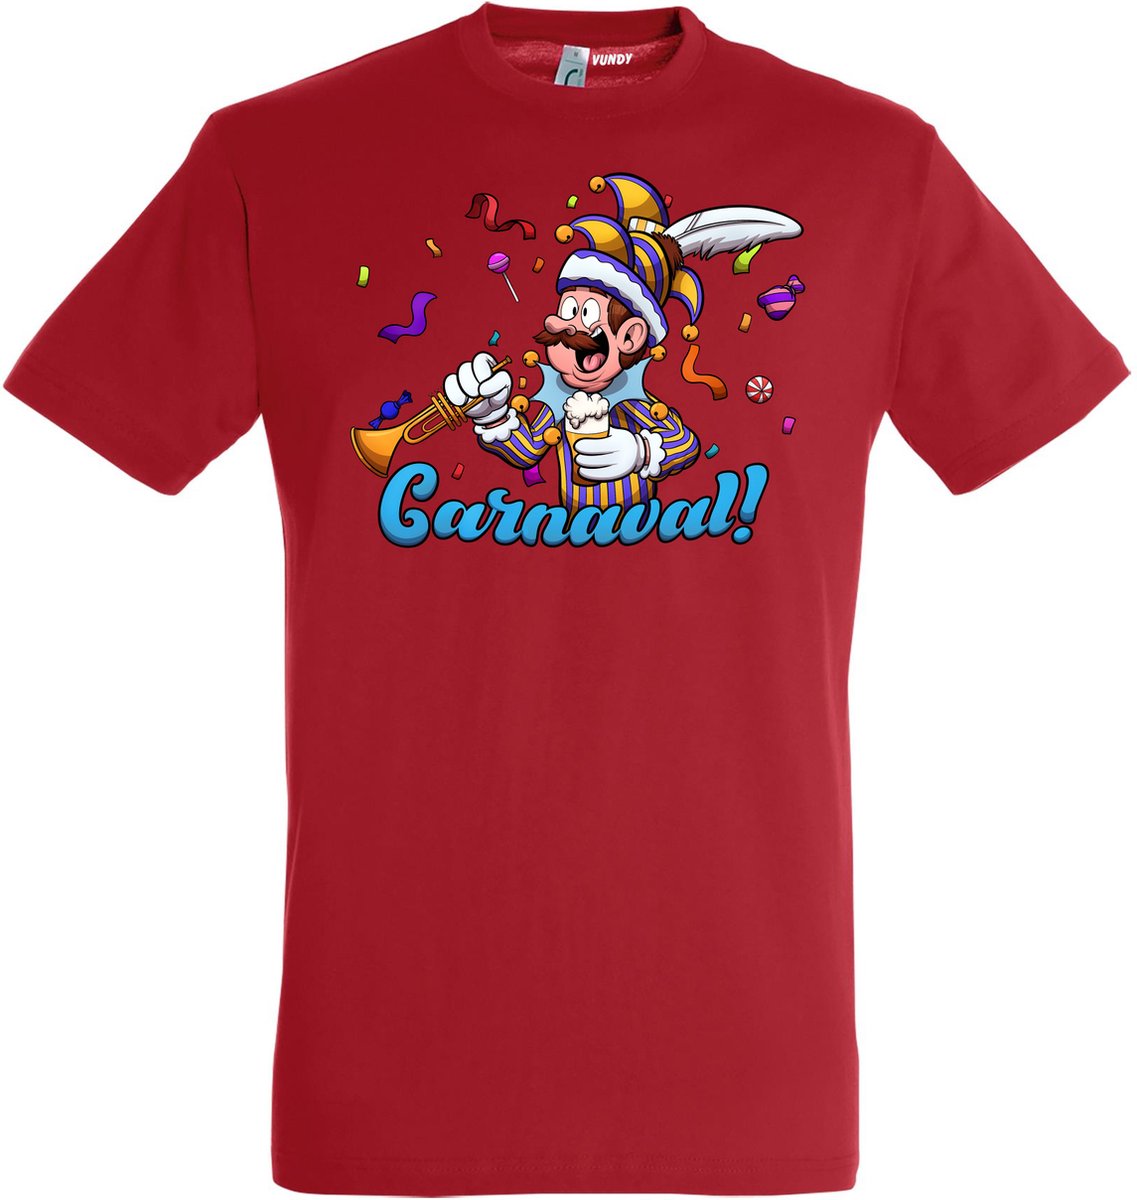 T-shirt kinderen Carnavalluh | Carnaval | Carnavalskleding Kinderen Baby | Rood | maat 104